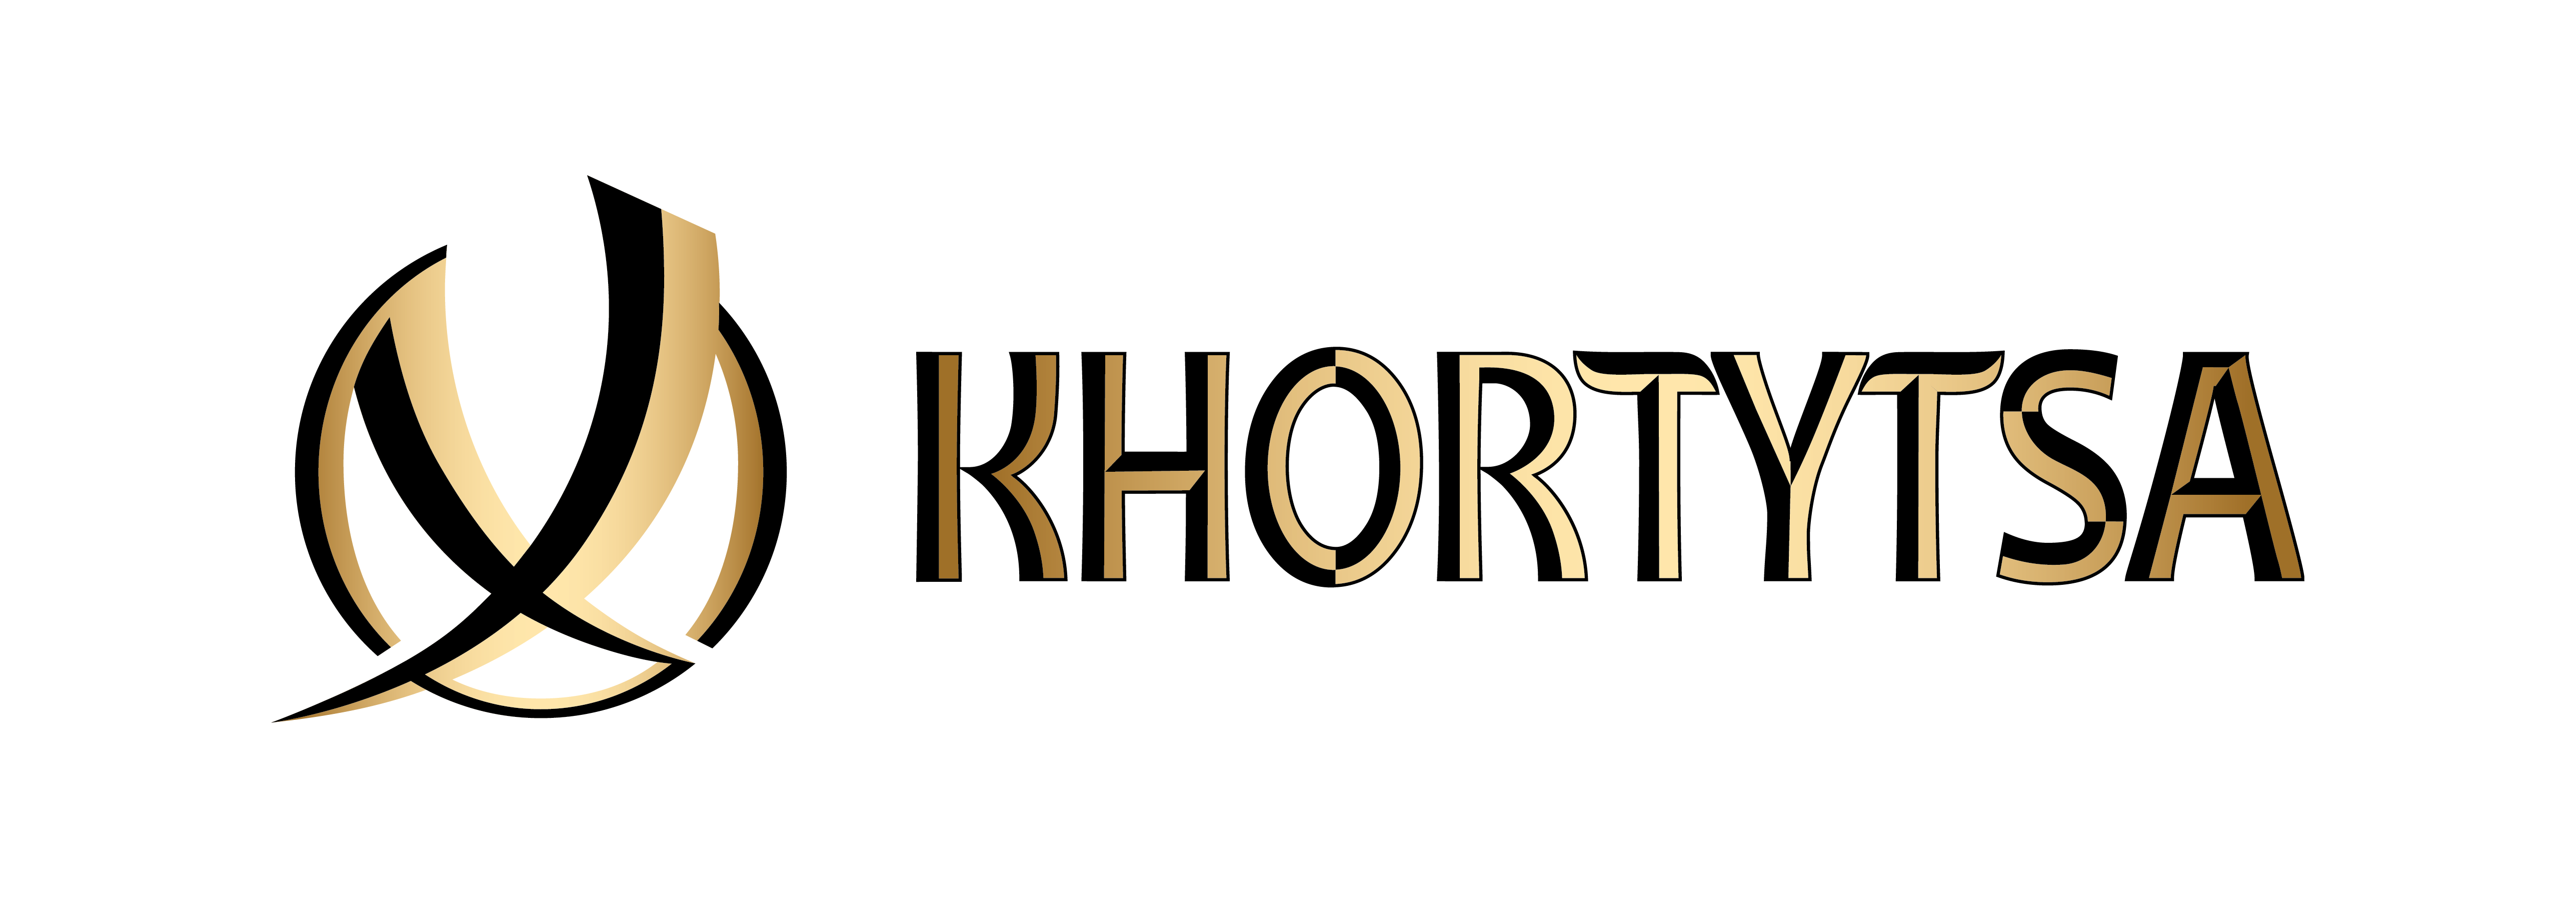 KHORTITSA 2019 gold 04